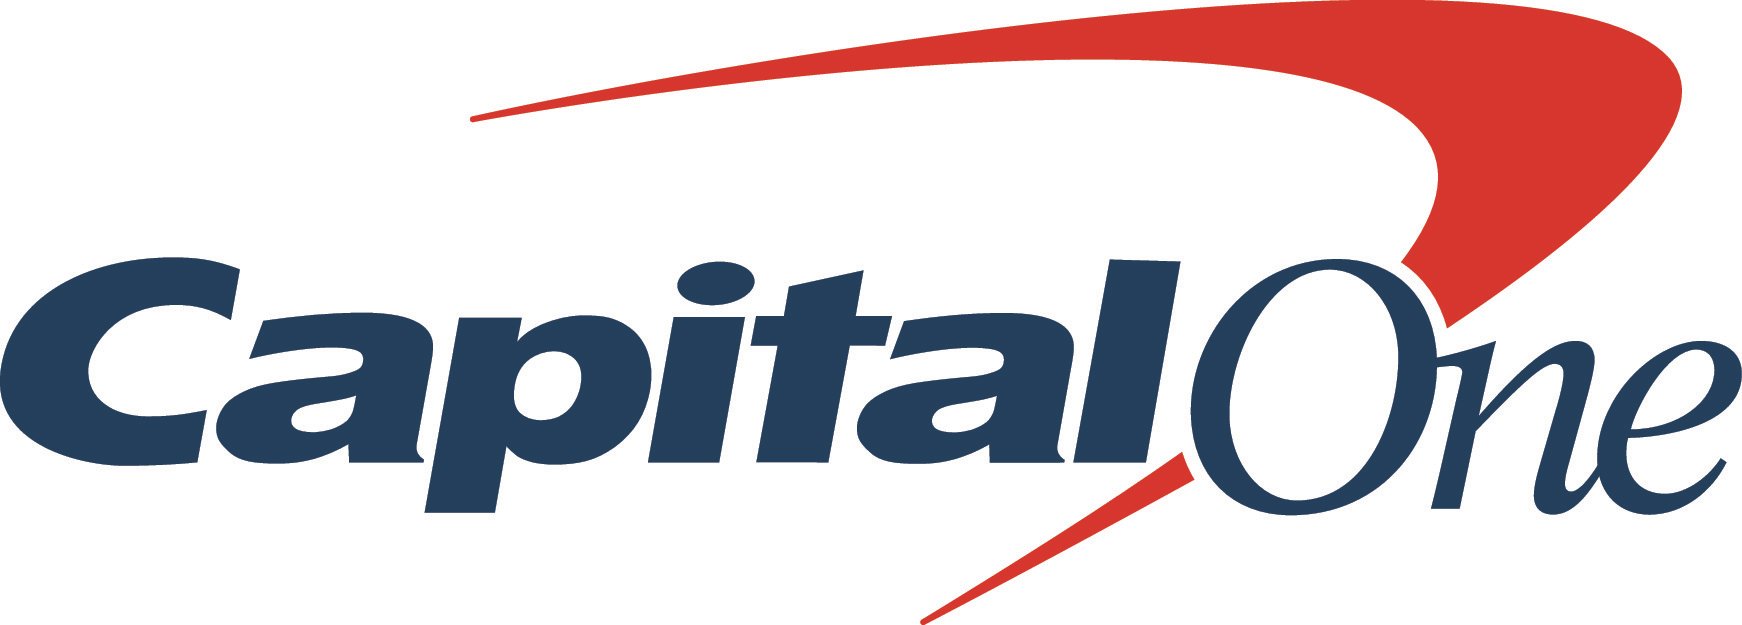 Capital logo